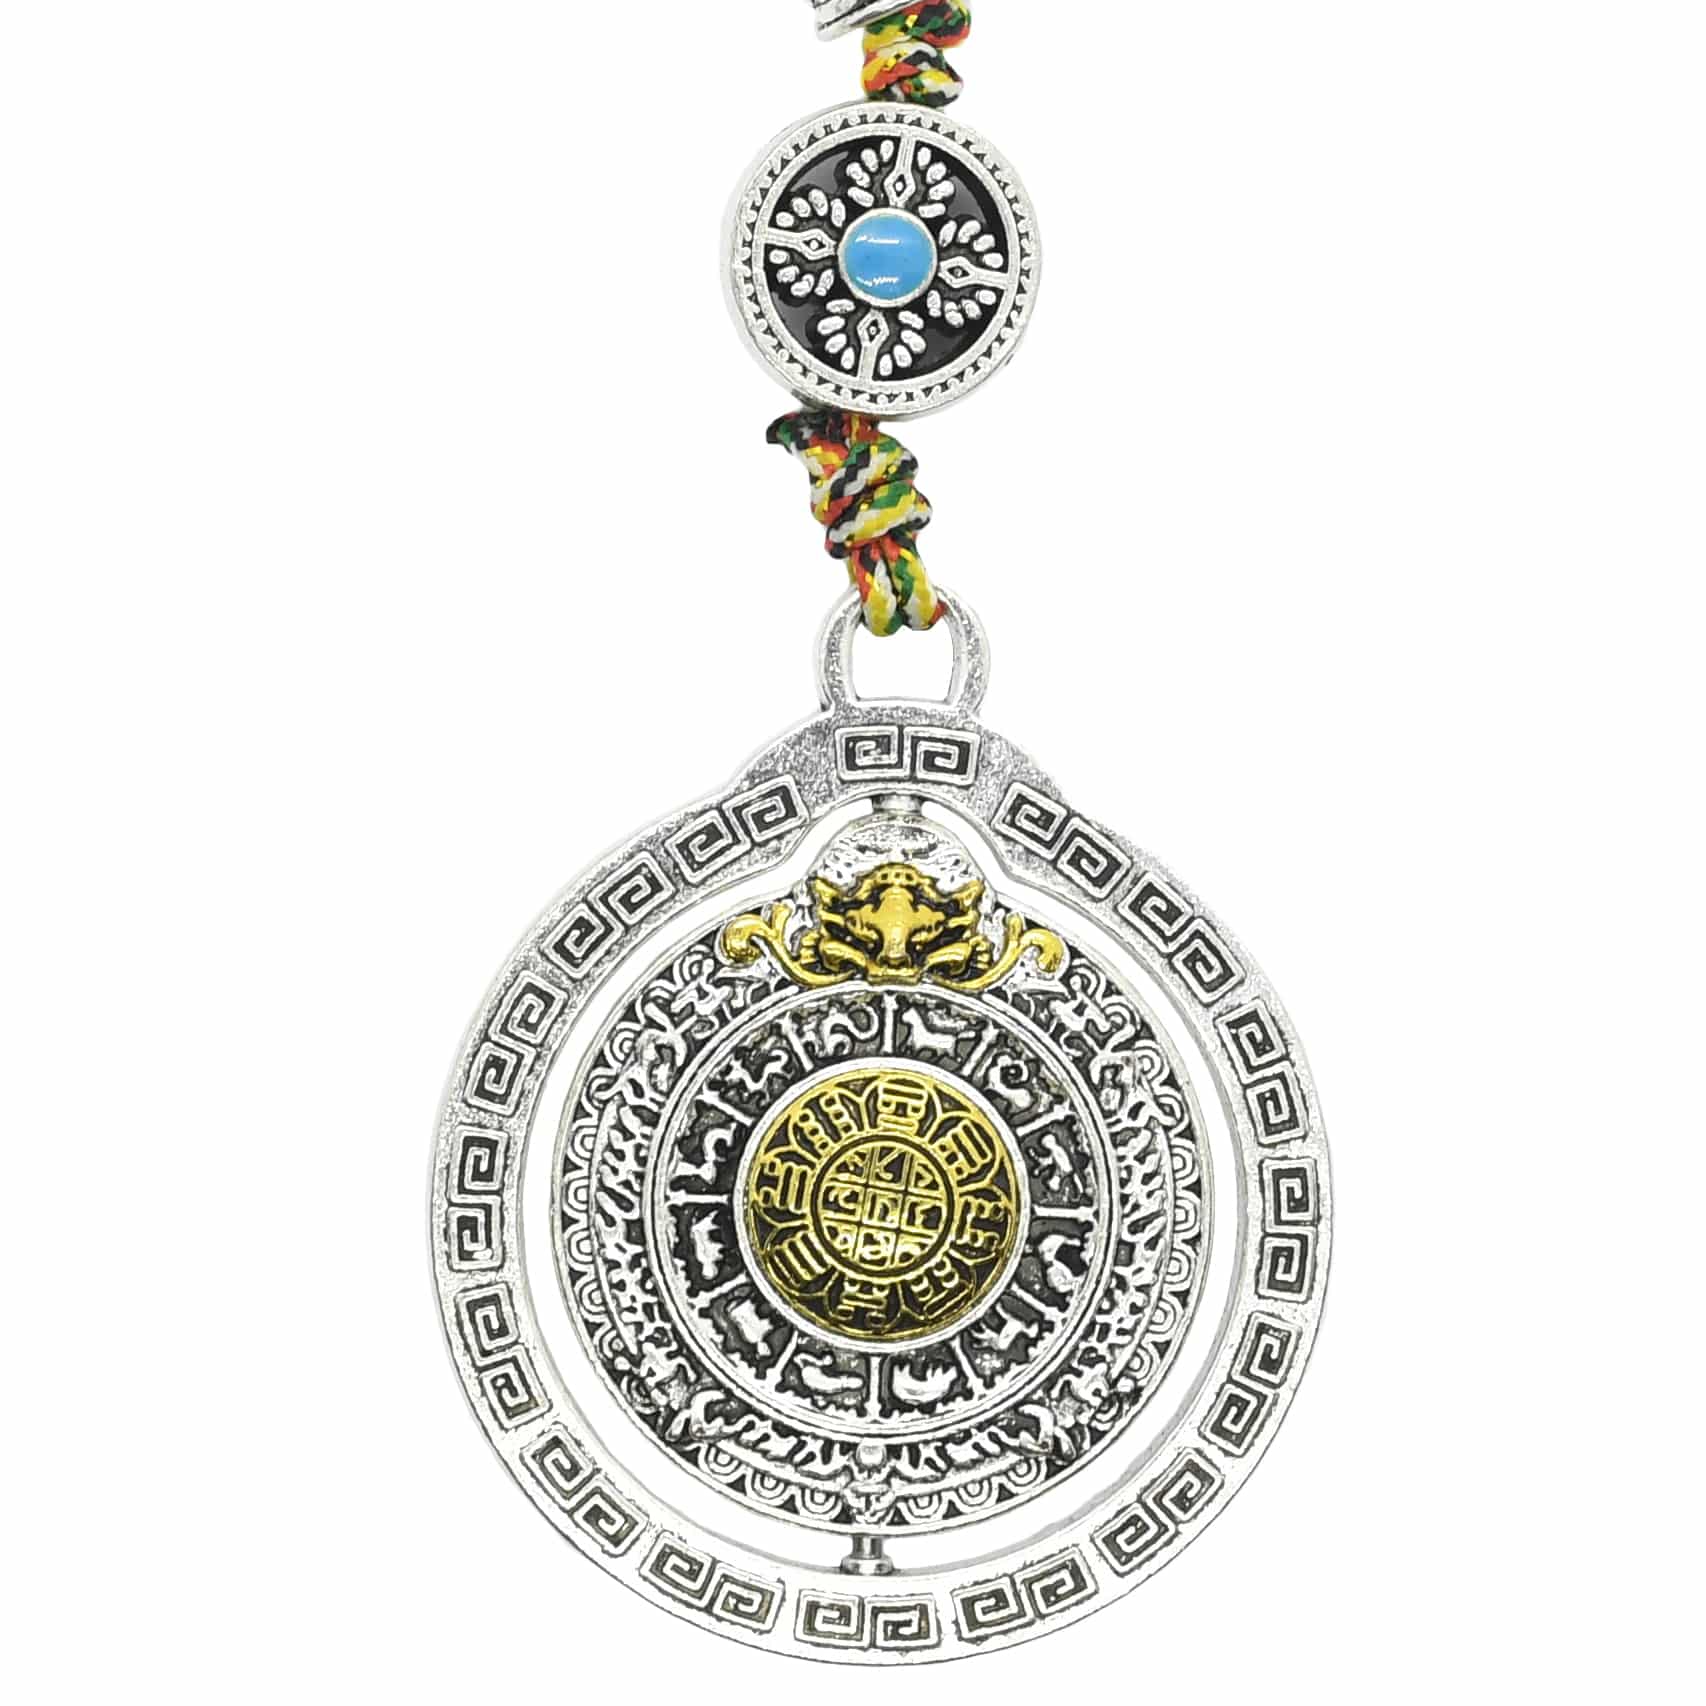 Amuleta cu cele 8 simboluri tibetane, dubla dorje si vasul prosperitatii